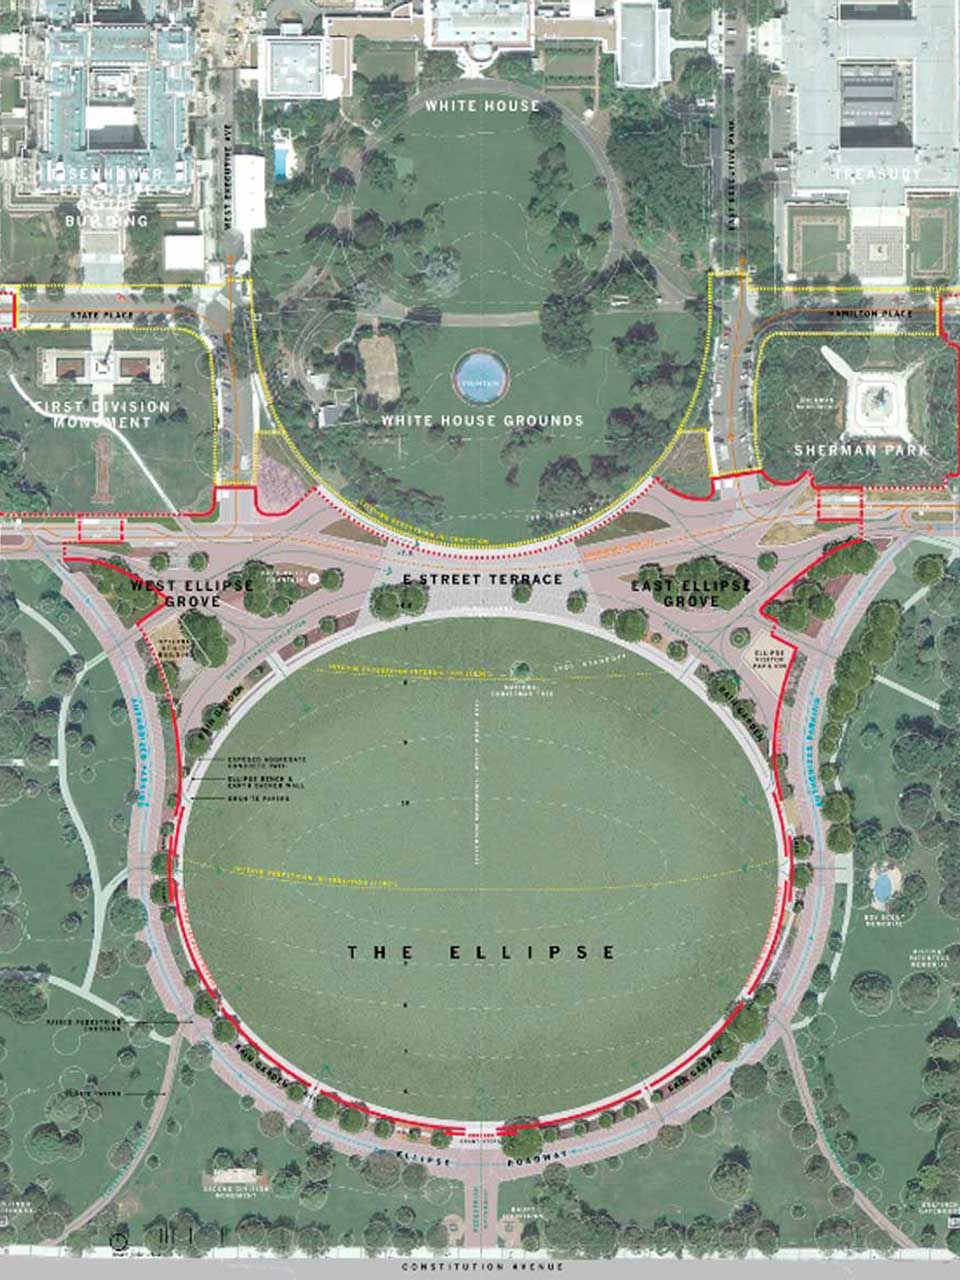 The President's Park of Washington